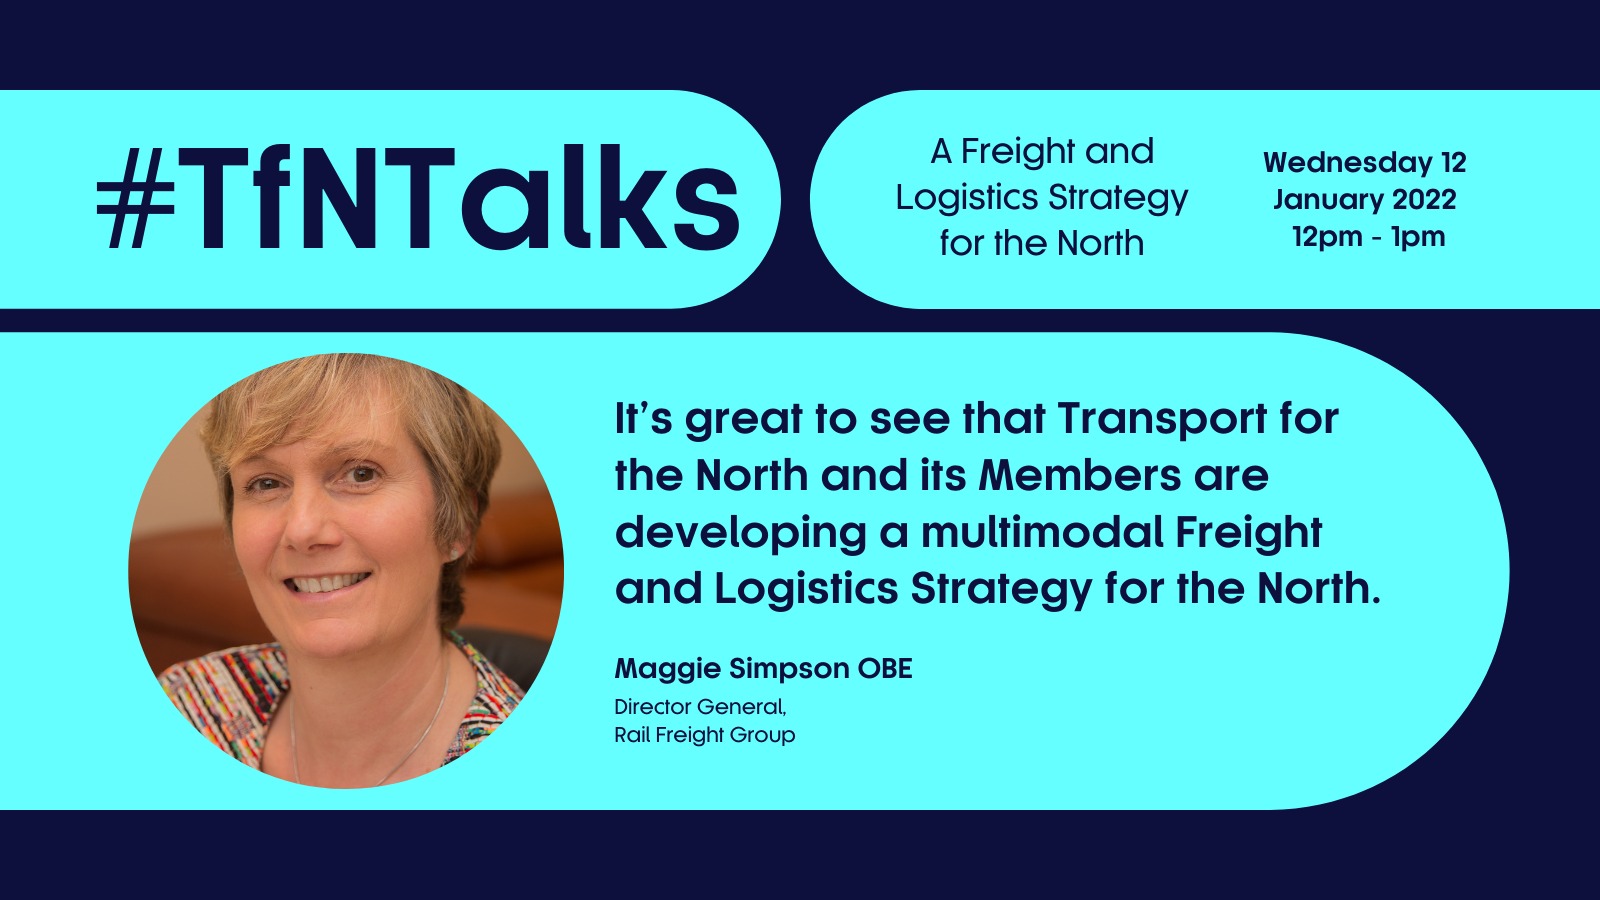 Maggie Simpson OBE on the TfNTalks Freight Strategy